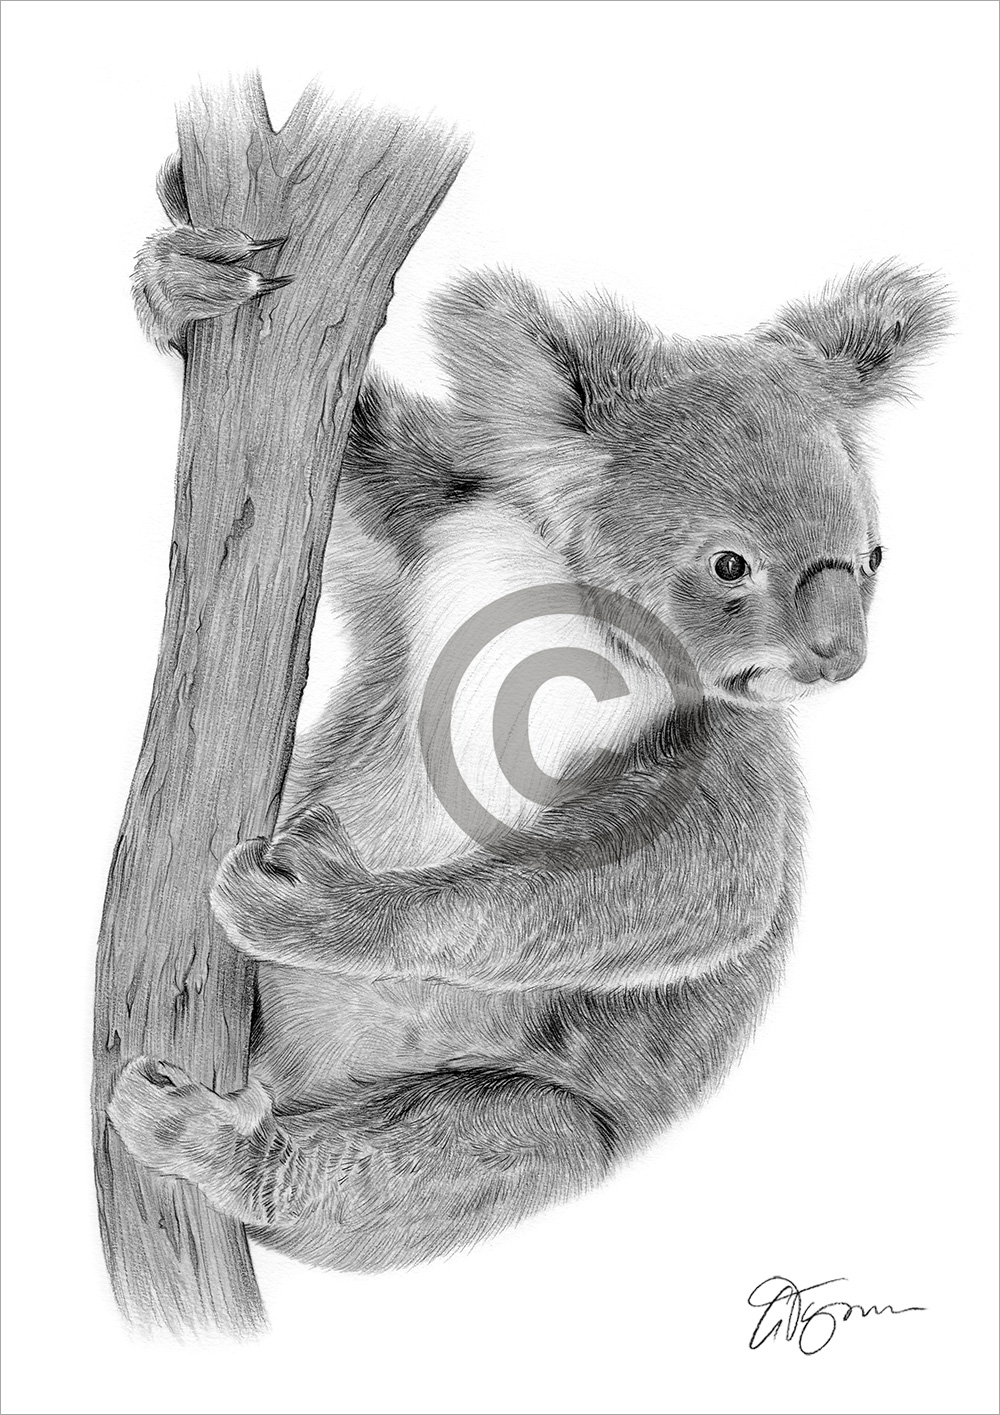 Pencil drawing of a koala on a tree by artist Gary Tymon